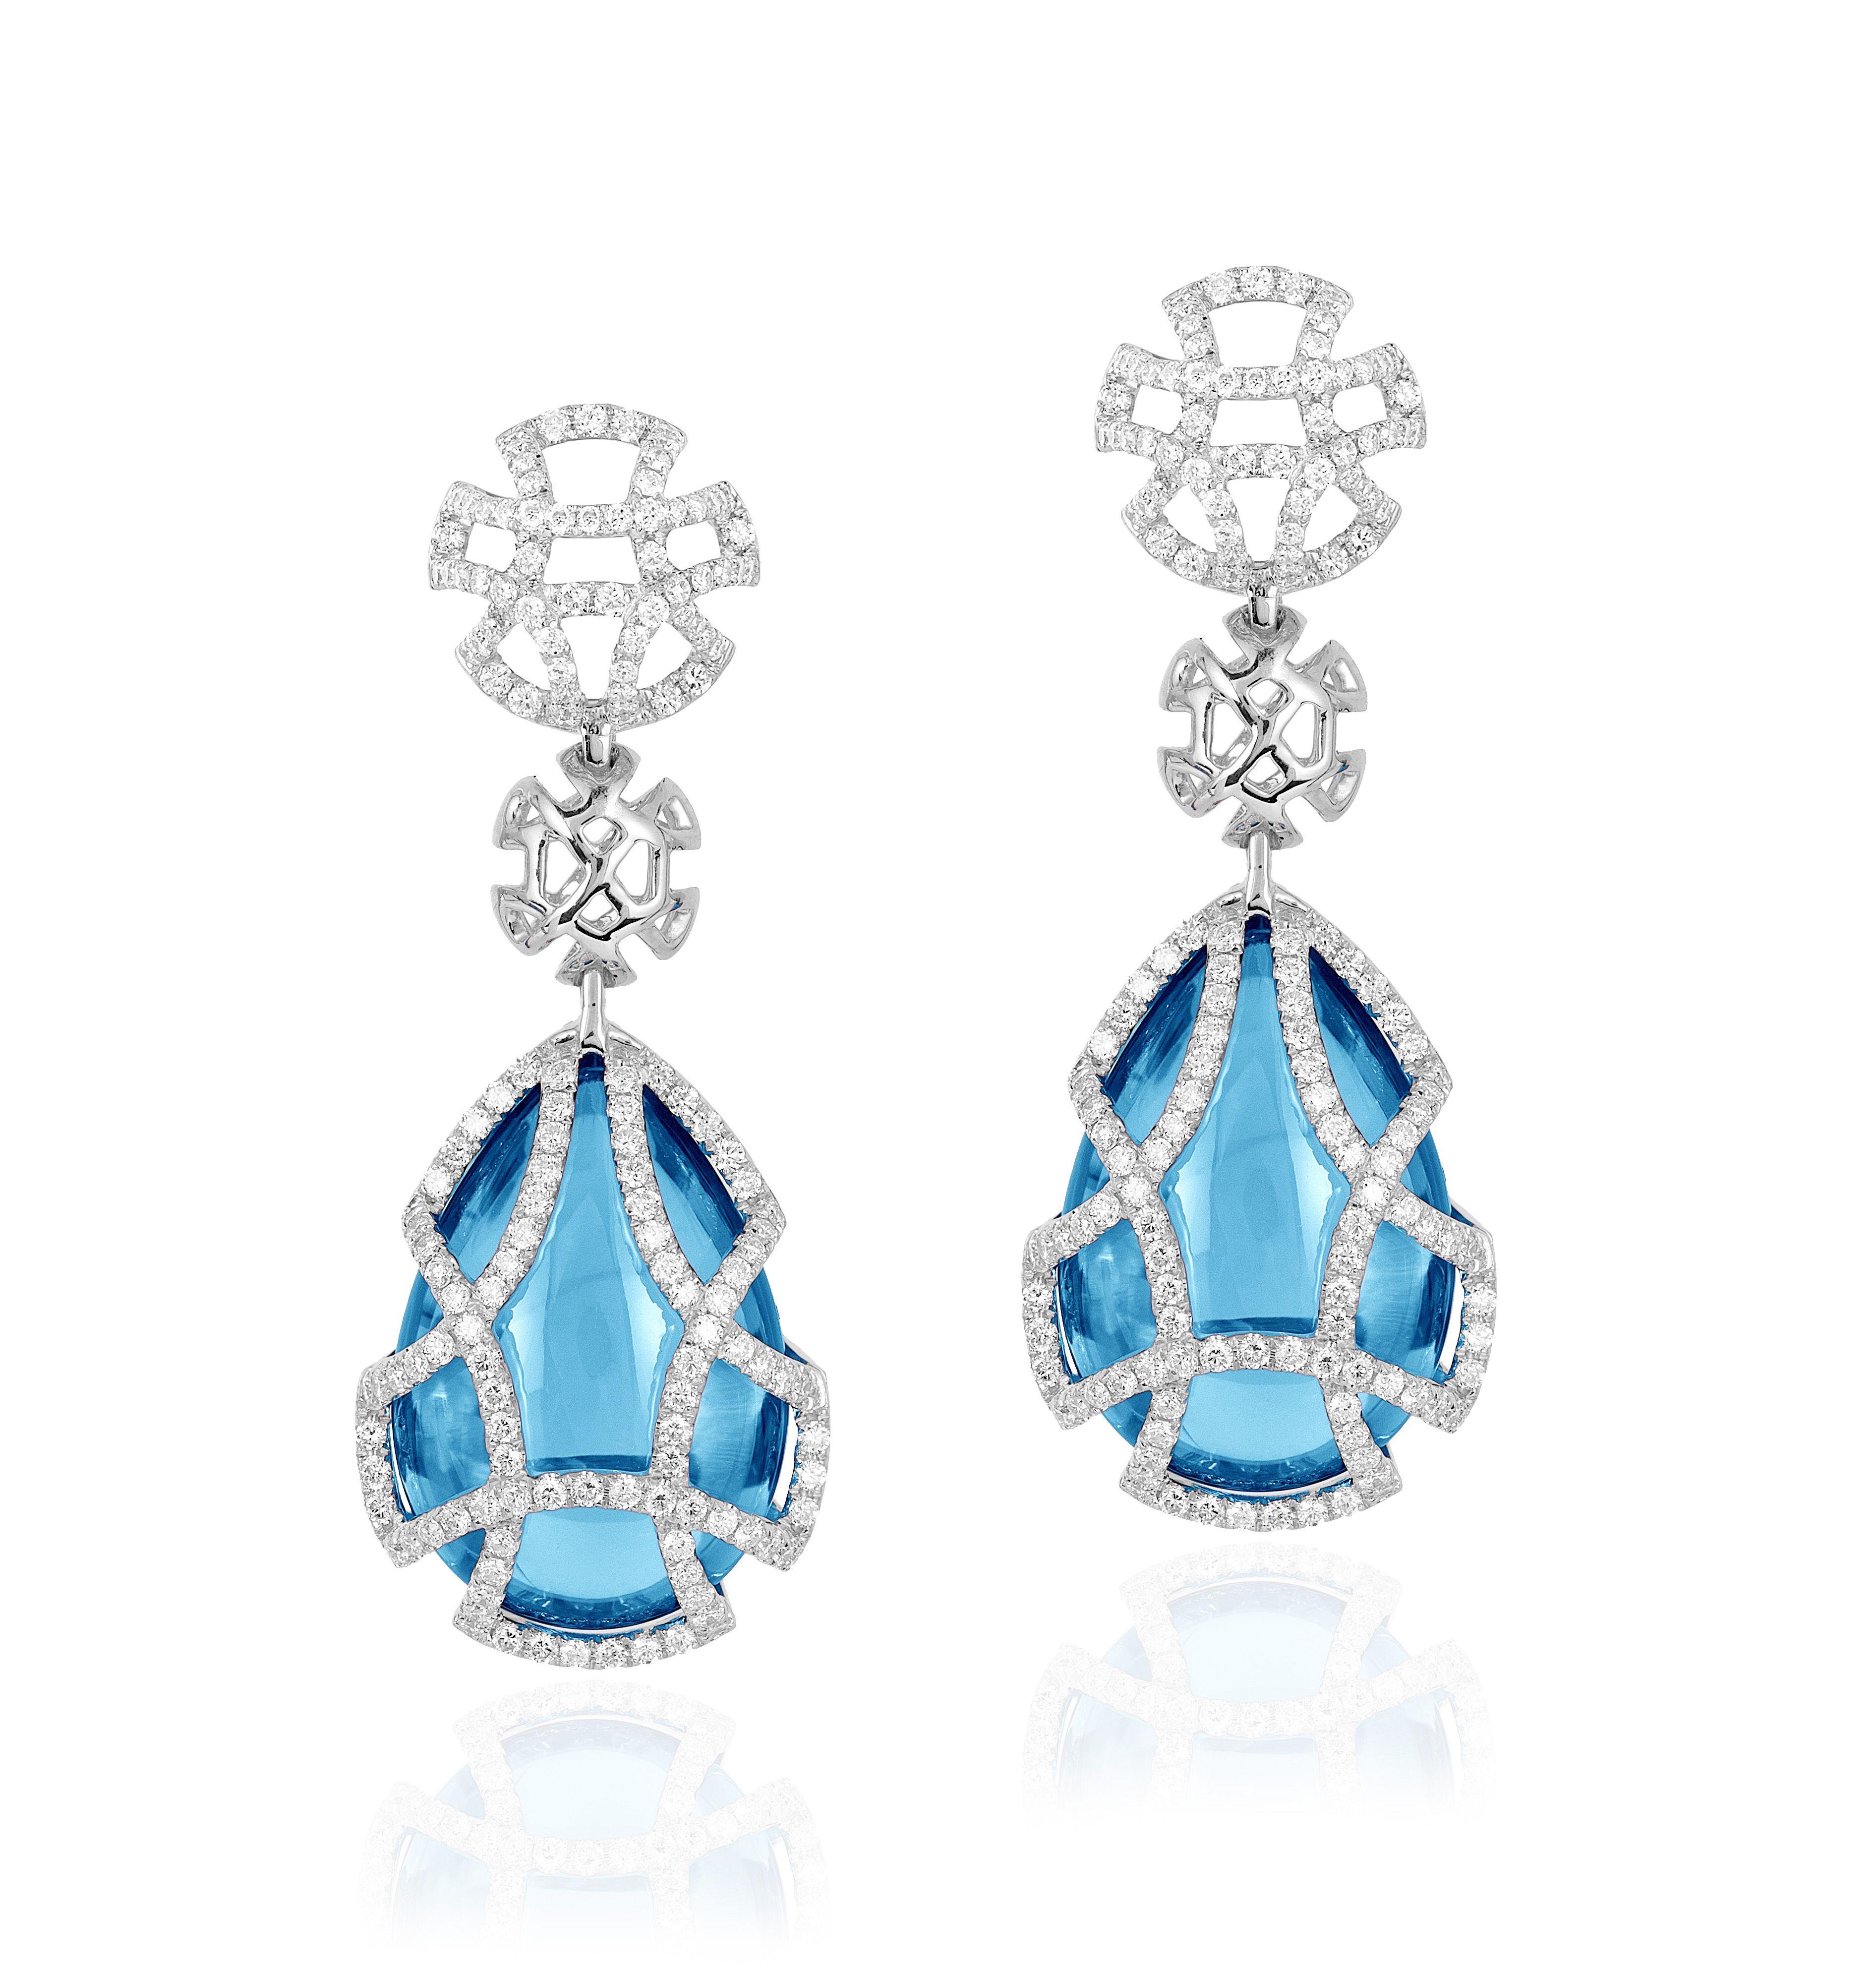 Contemporary Goshwara Blue Topaz Teardrop and Diamond Earrings